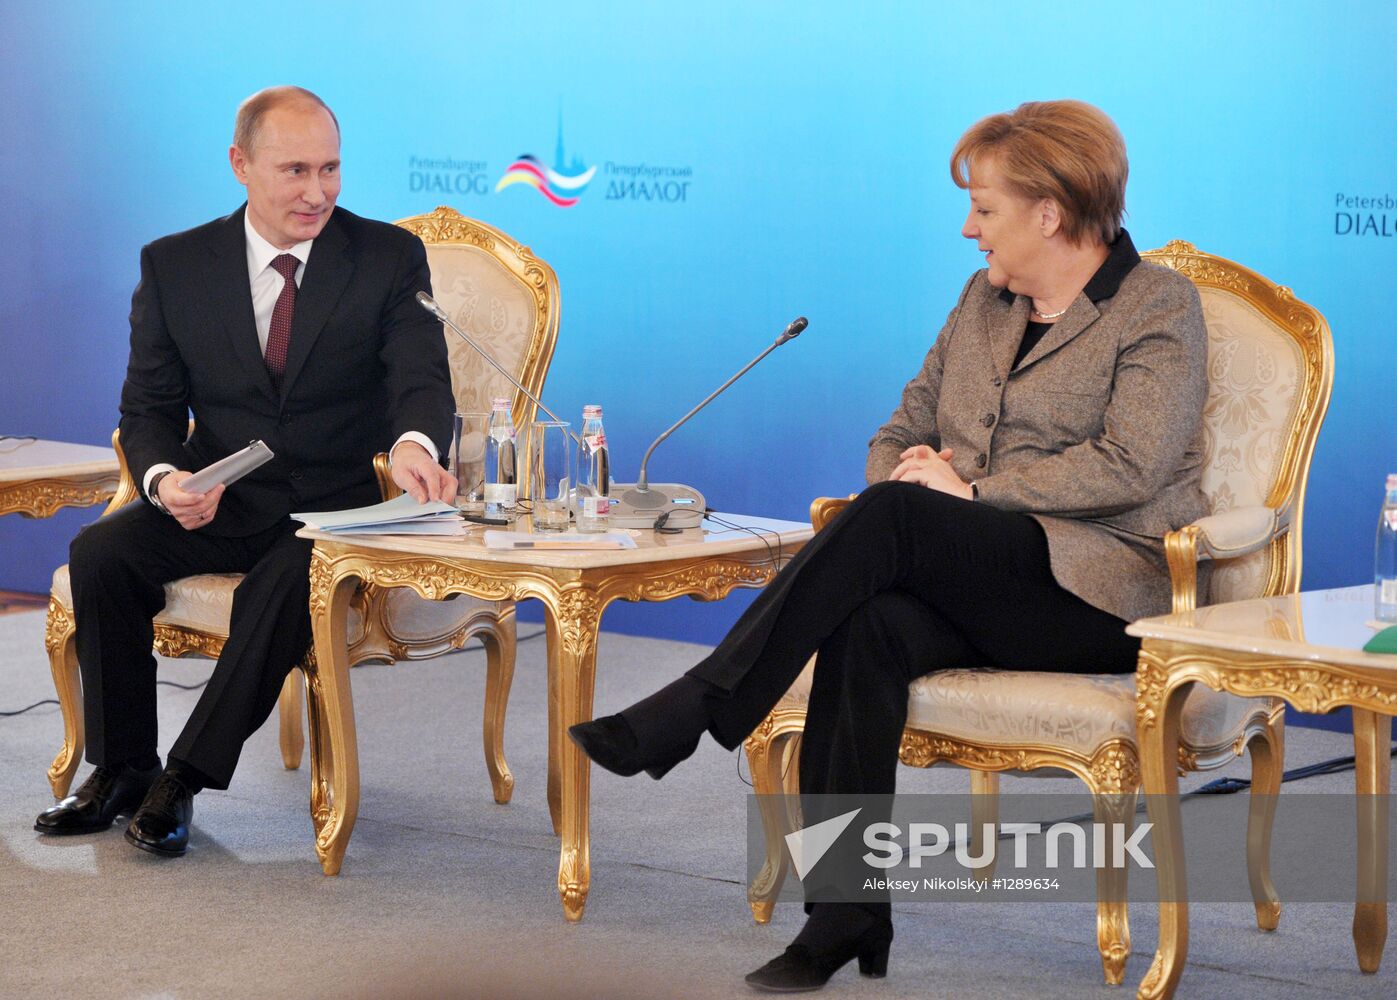 Vladimir Putin and Angela Merkel at St. Petersburg Dialog Forum